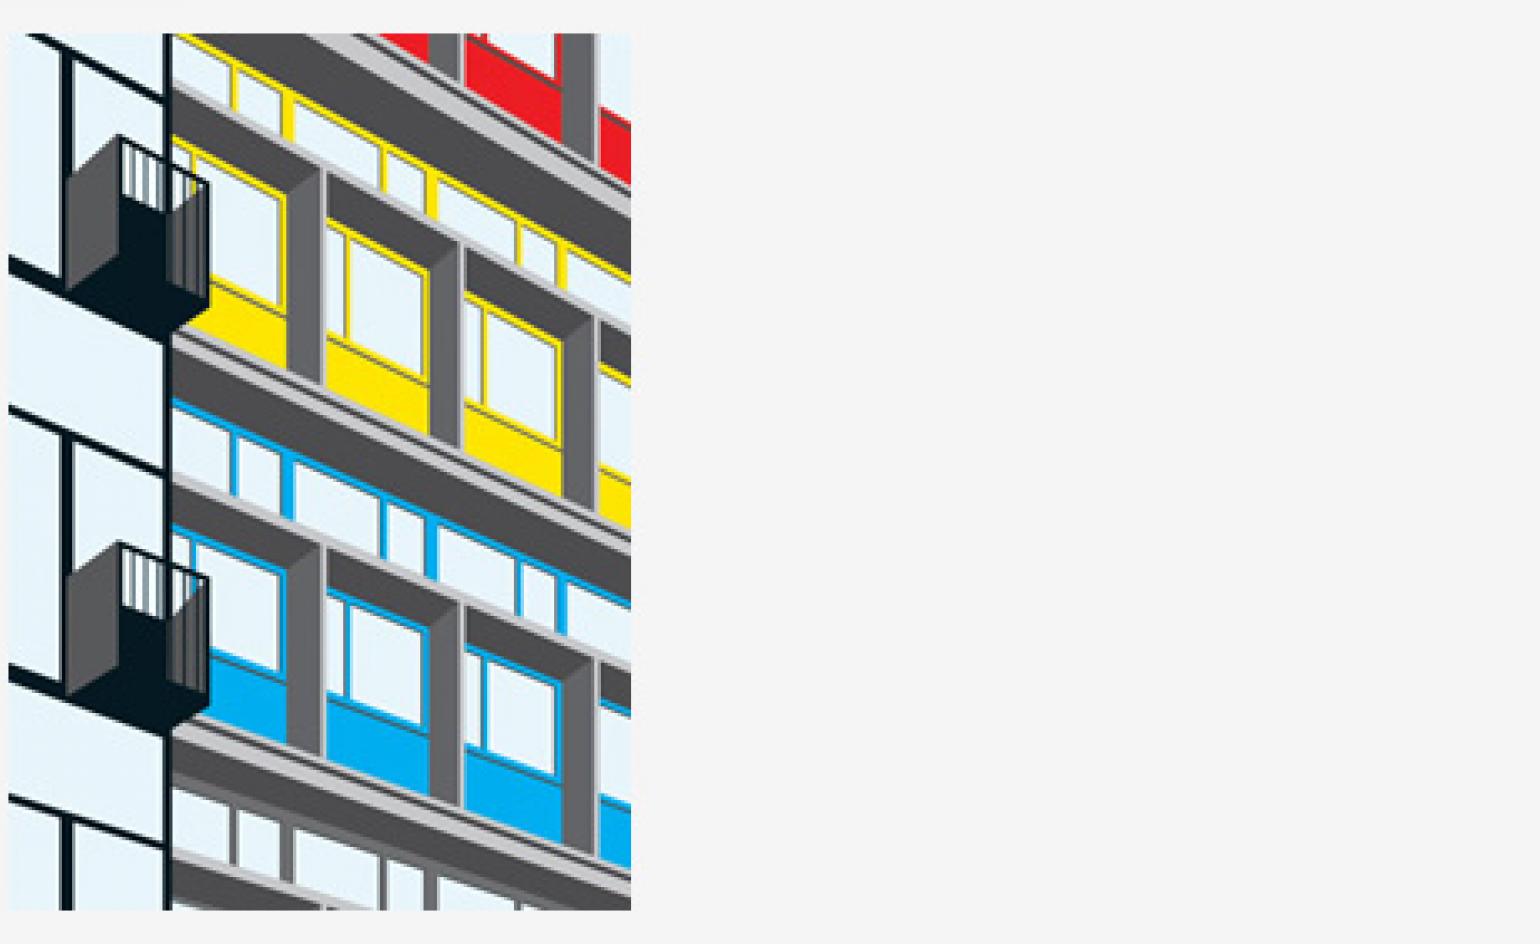 WALLPAPER MAGAZINE No.# 6 Joe Colombo YSL Le Corbusier LONDON DESIGN Ikea  BILBAO | eBay